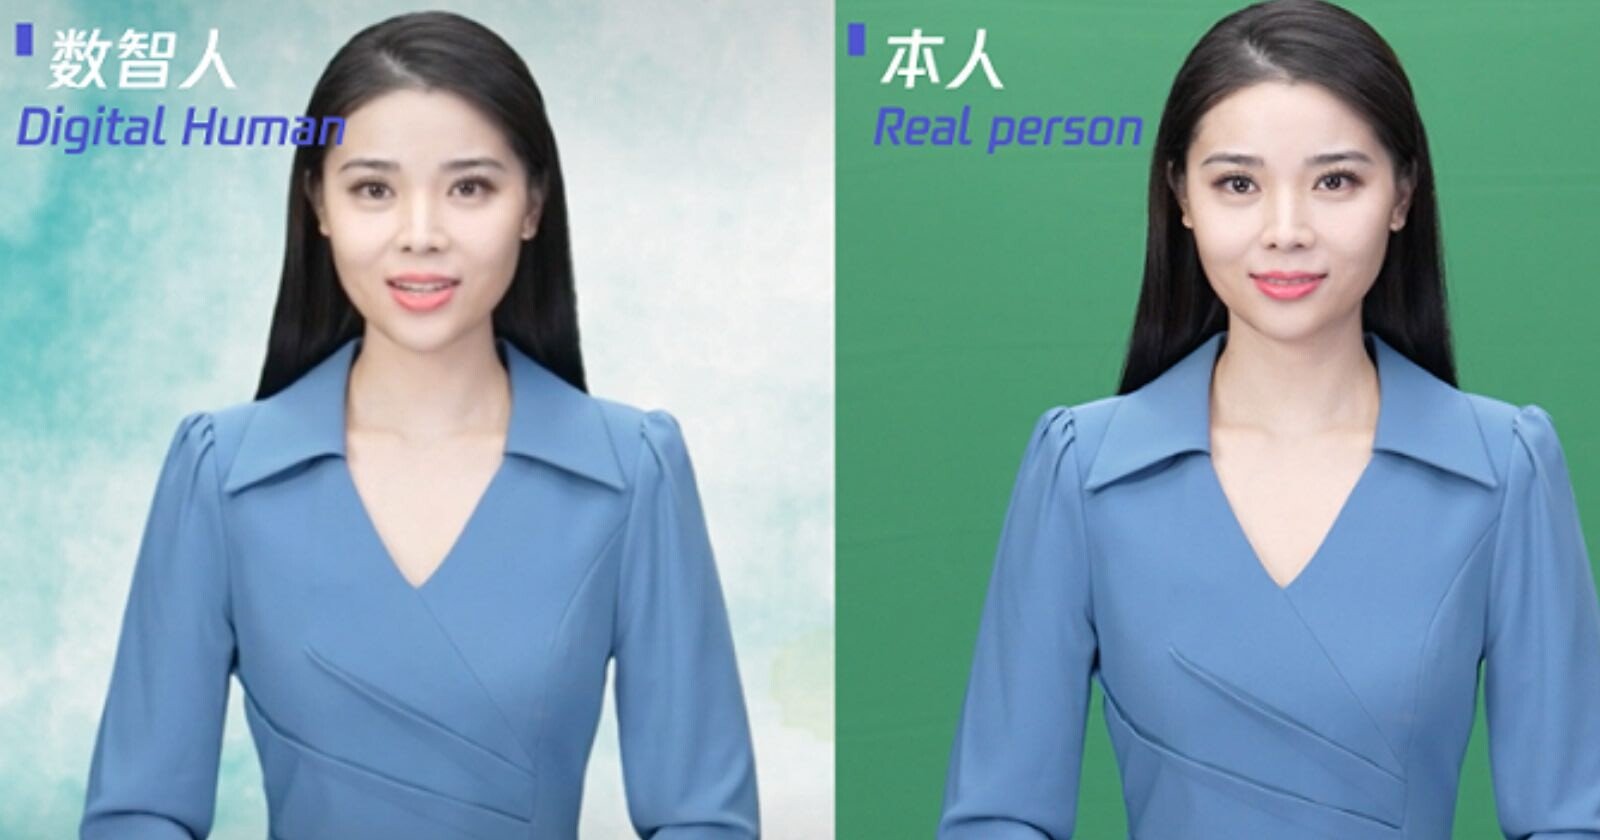  chinese company lets make deepfake digital human 